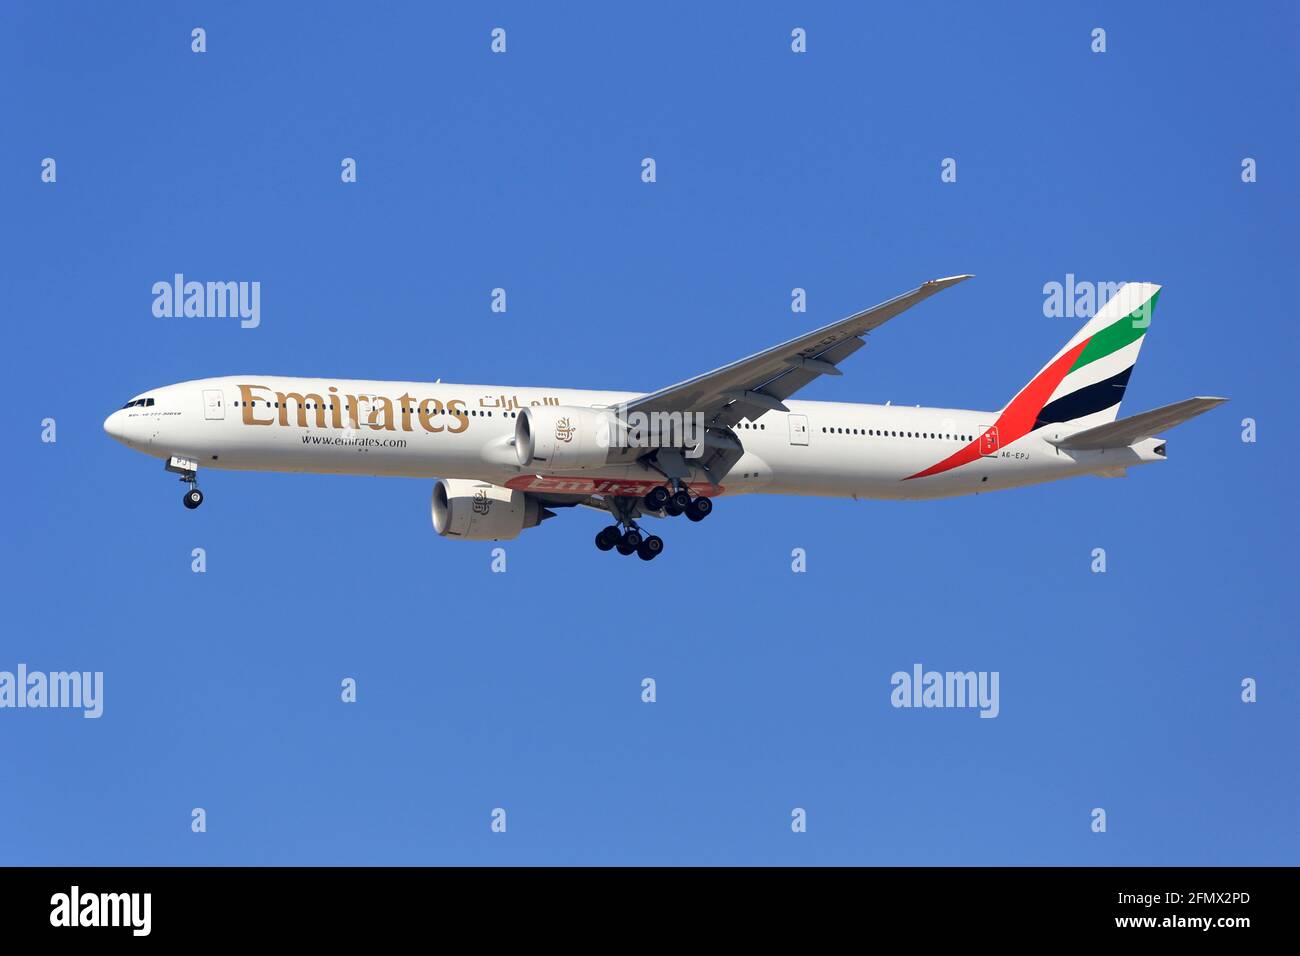 Dubai, United Arab Emirates - 7. March 2017: Emirates Boeing 777-300ER airplane at Dubai airport (DXB) in the United Arab Emirates. Stock Photo